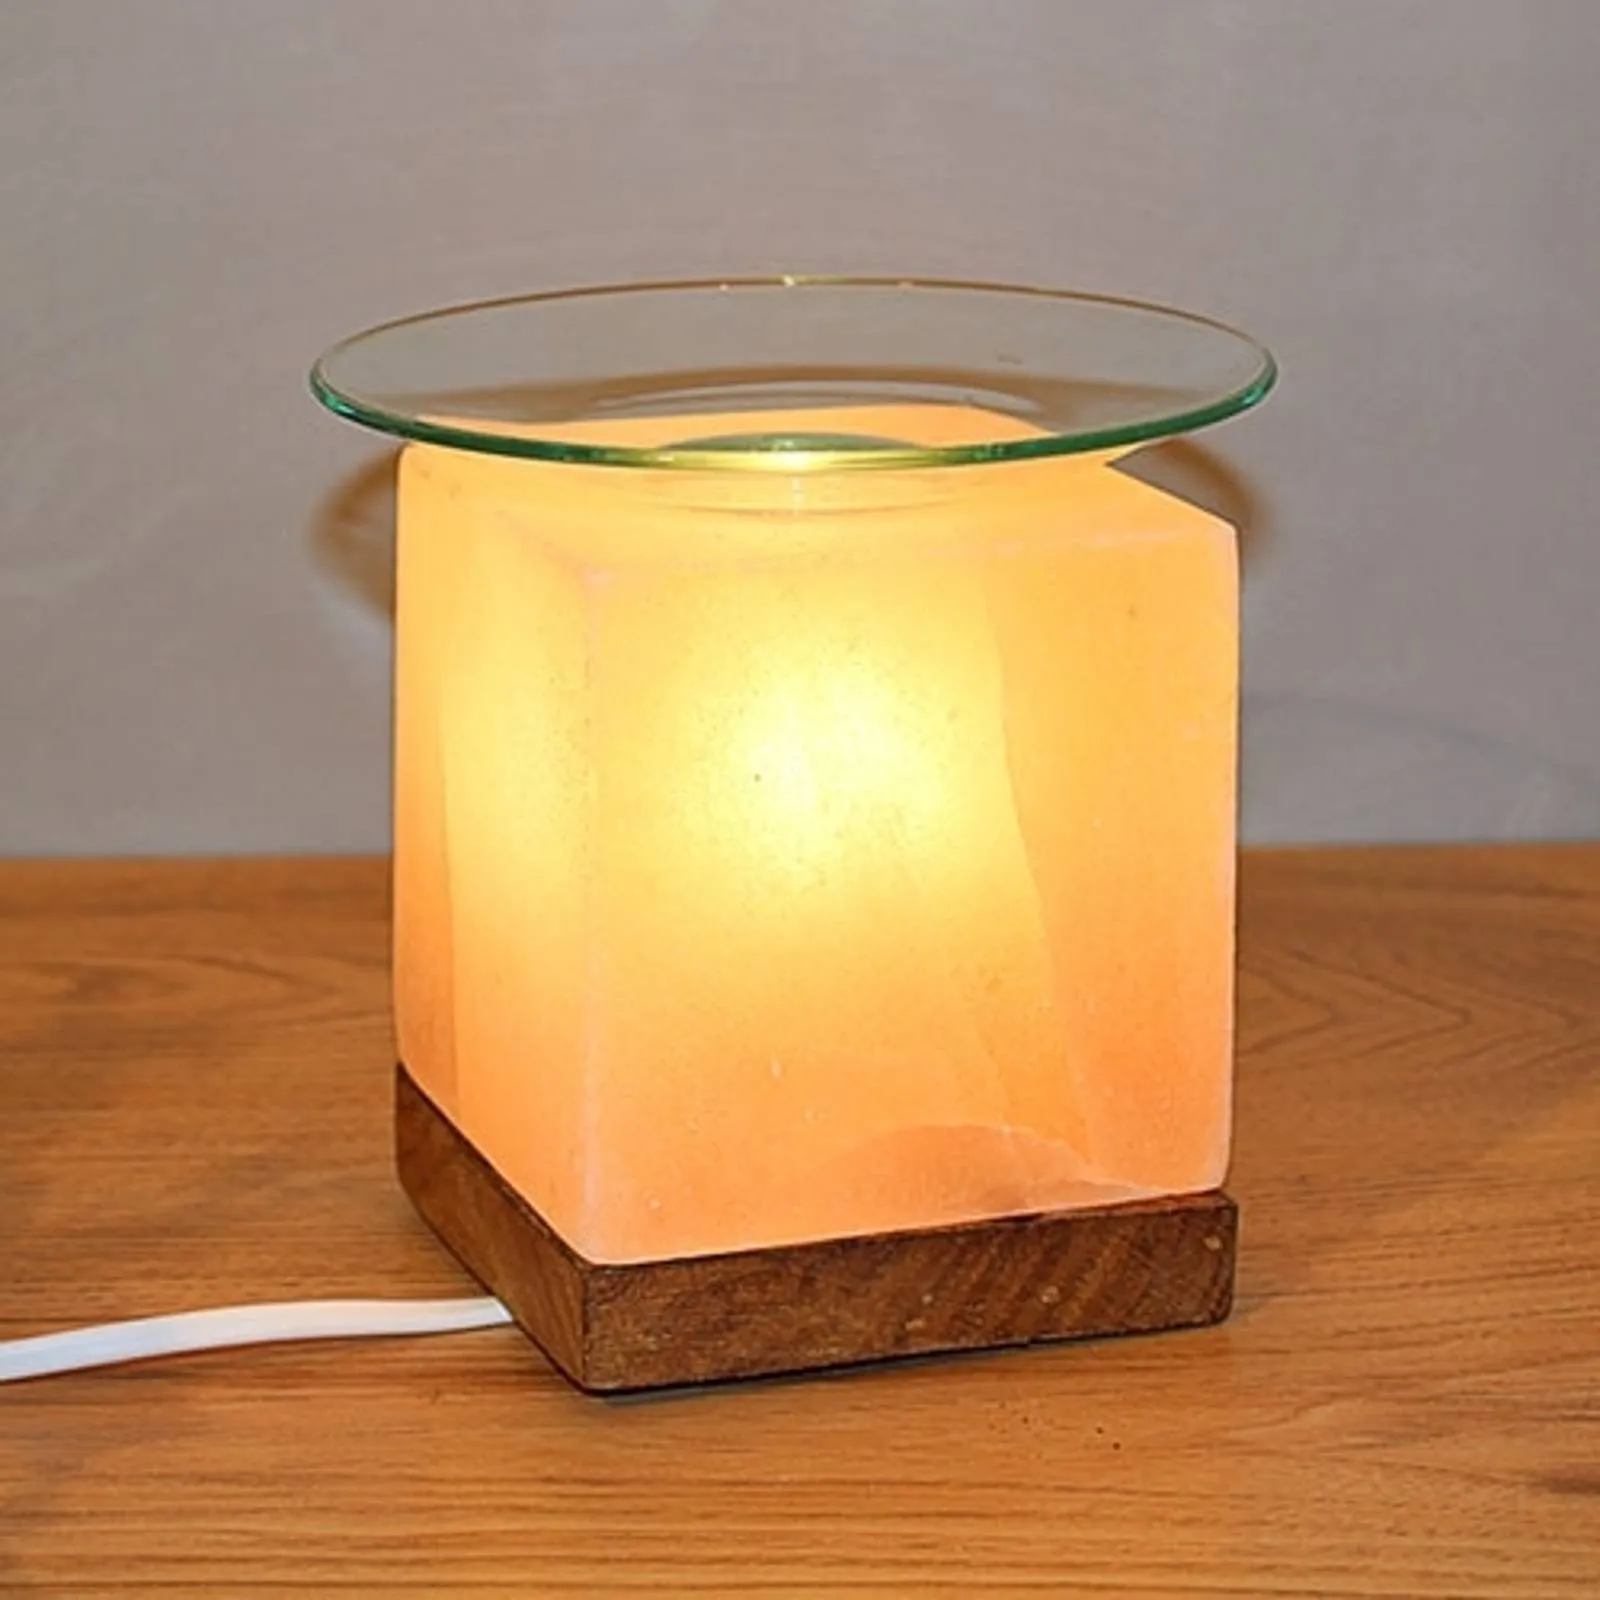 CUBE aroma salt lamp for atmospheric lighting